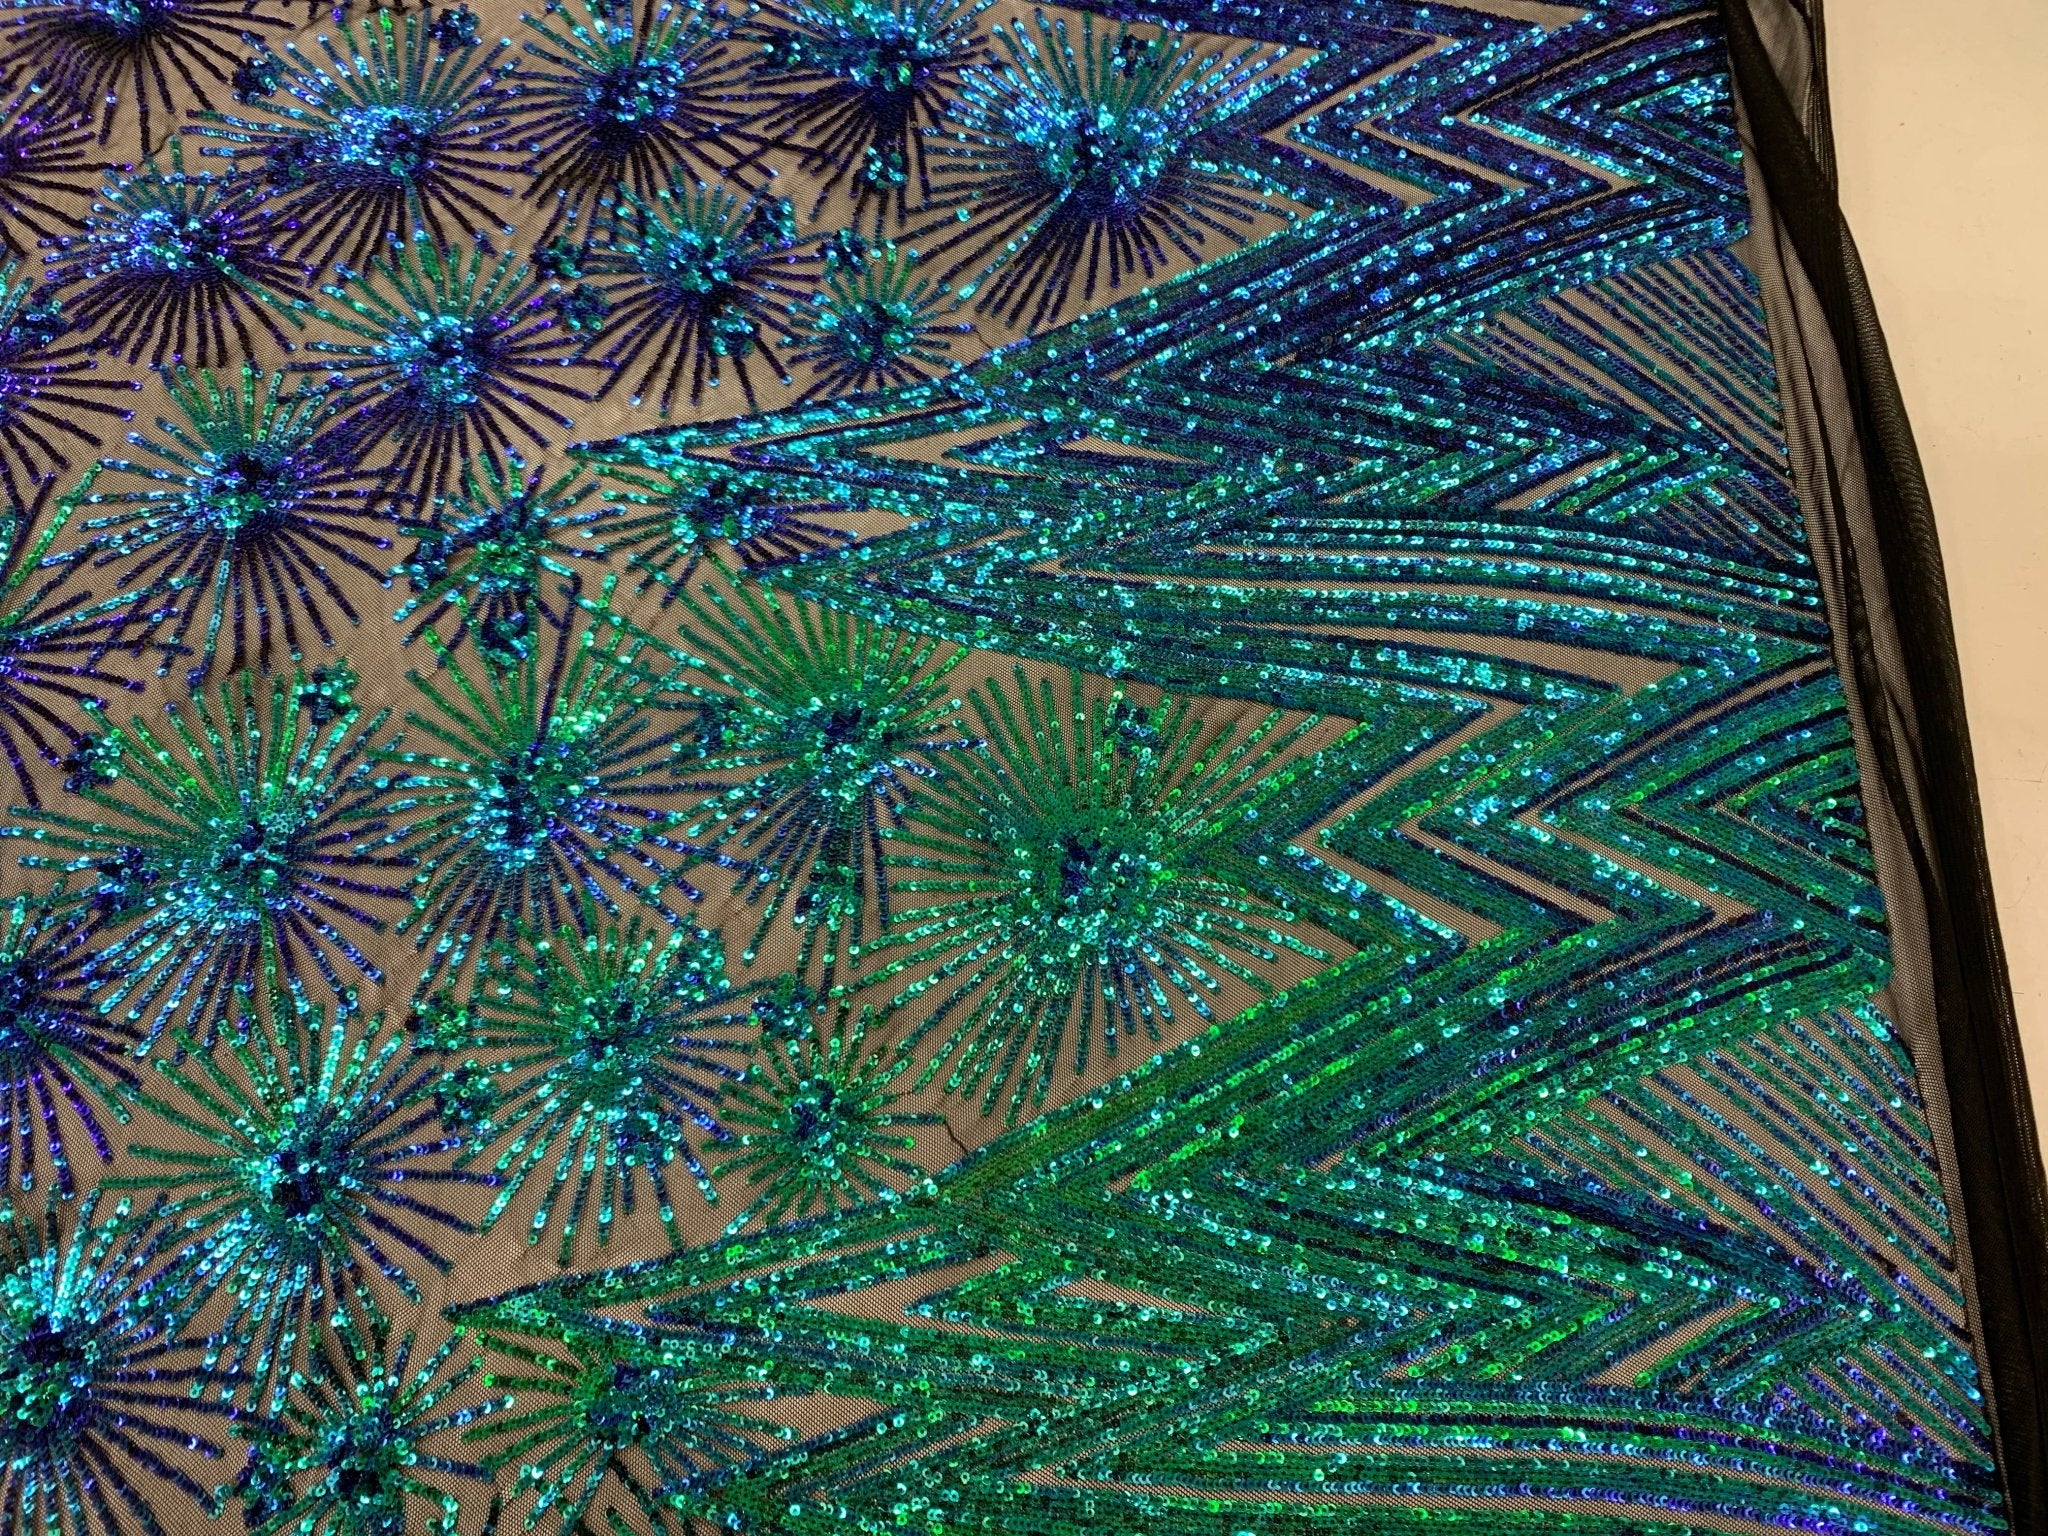 4 Way Stretch Iridescent Geometric Sequin Embroidered Mesh Lace FabricICEFABRICICE FABRICSGreen IridescentBy The Yard (58" Wide)4 Way Stretch Iridescent Geometric Sequin Embroidered Mesh Lace Fabric ICEFABRIC |Green Iridescent